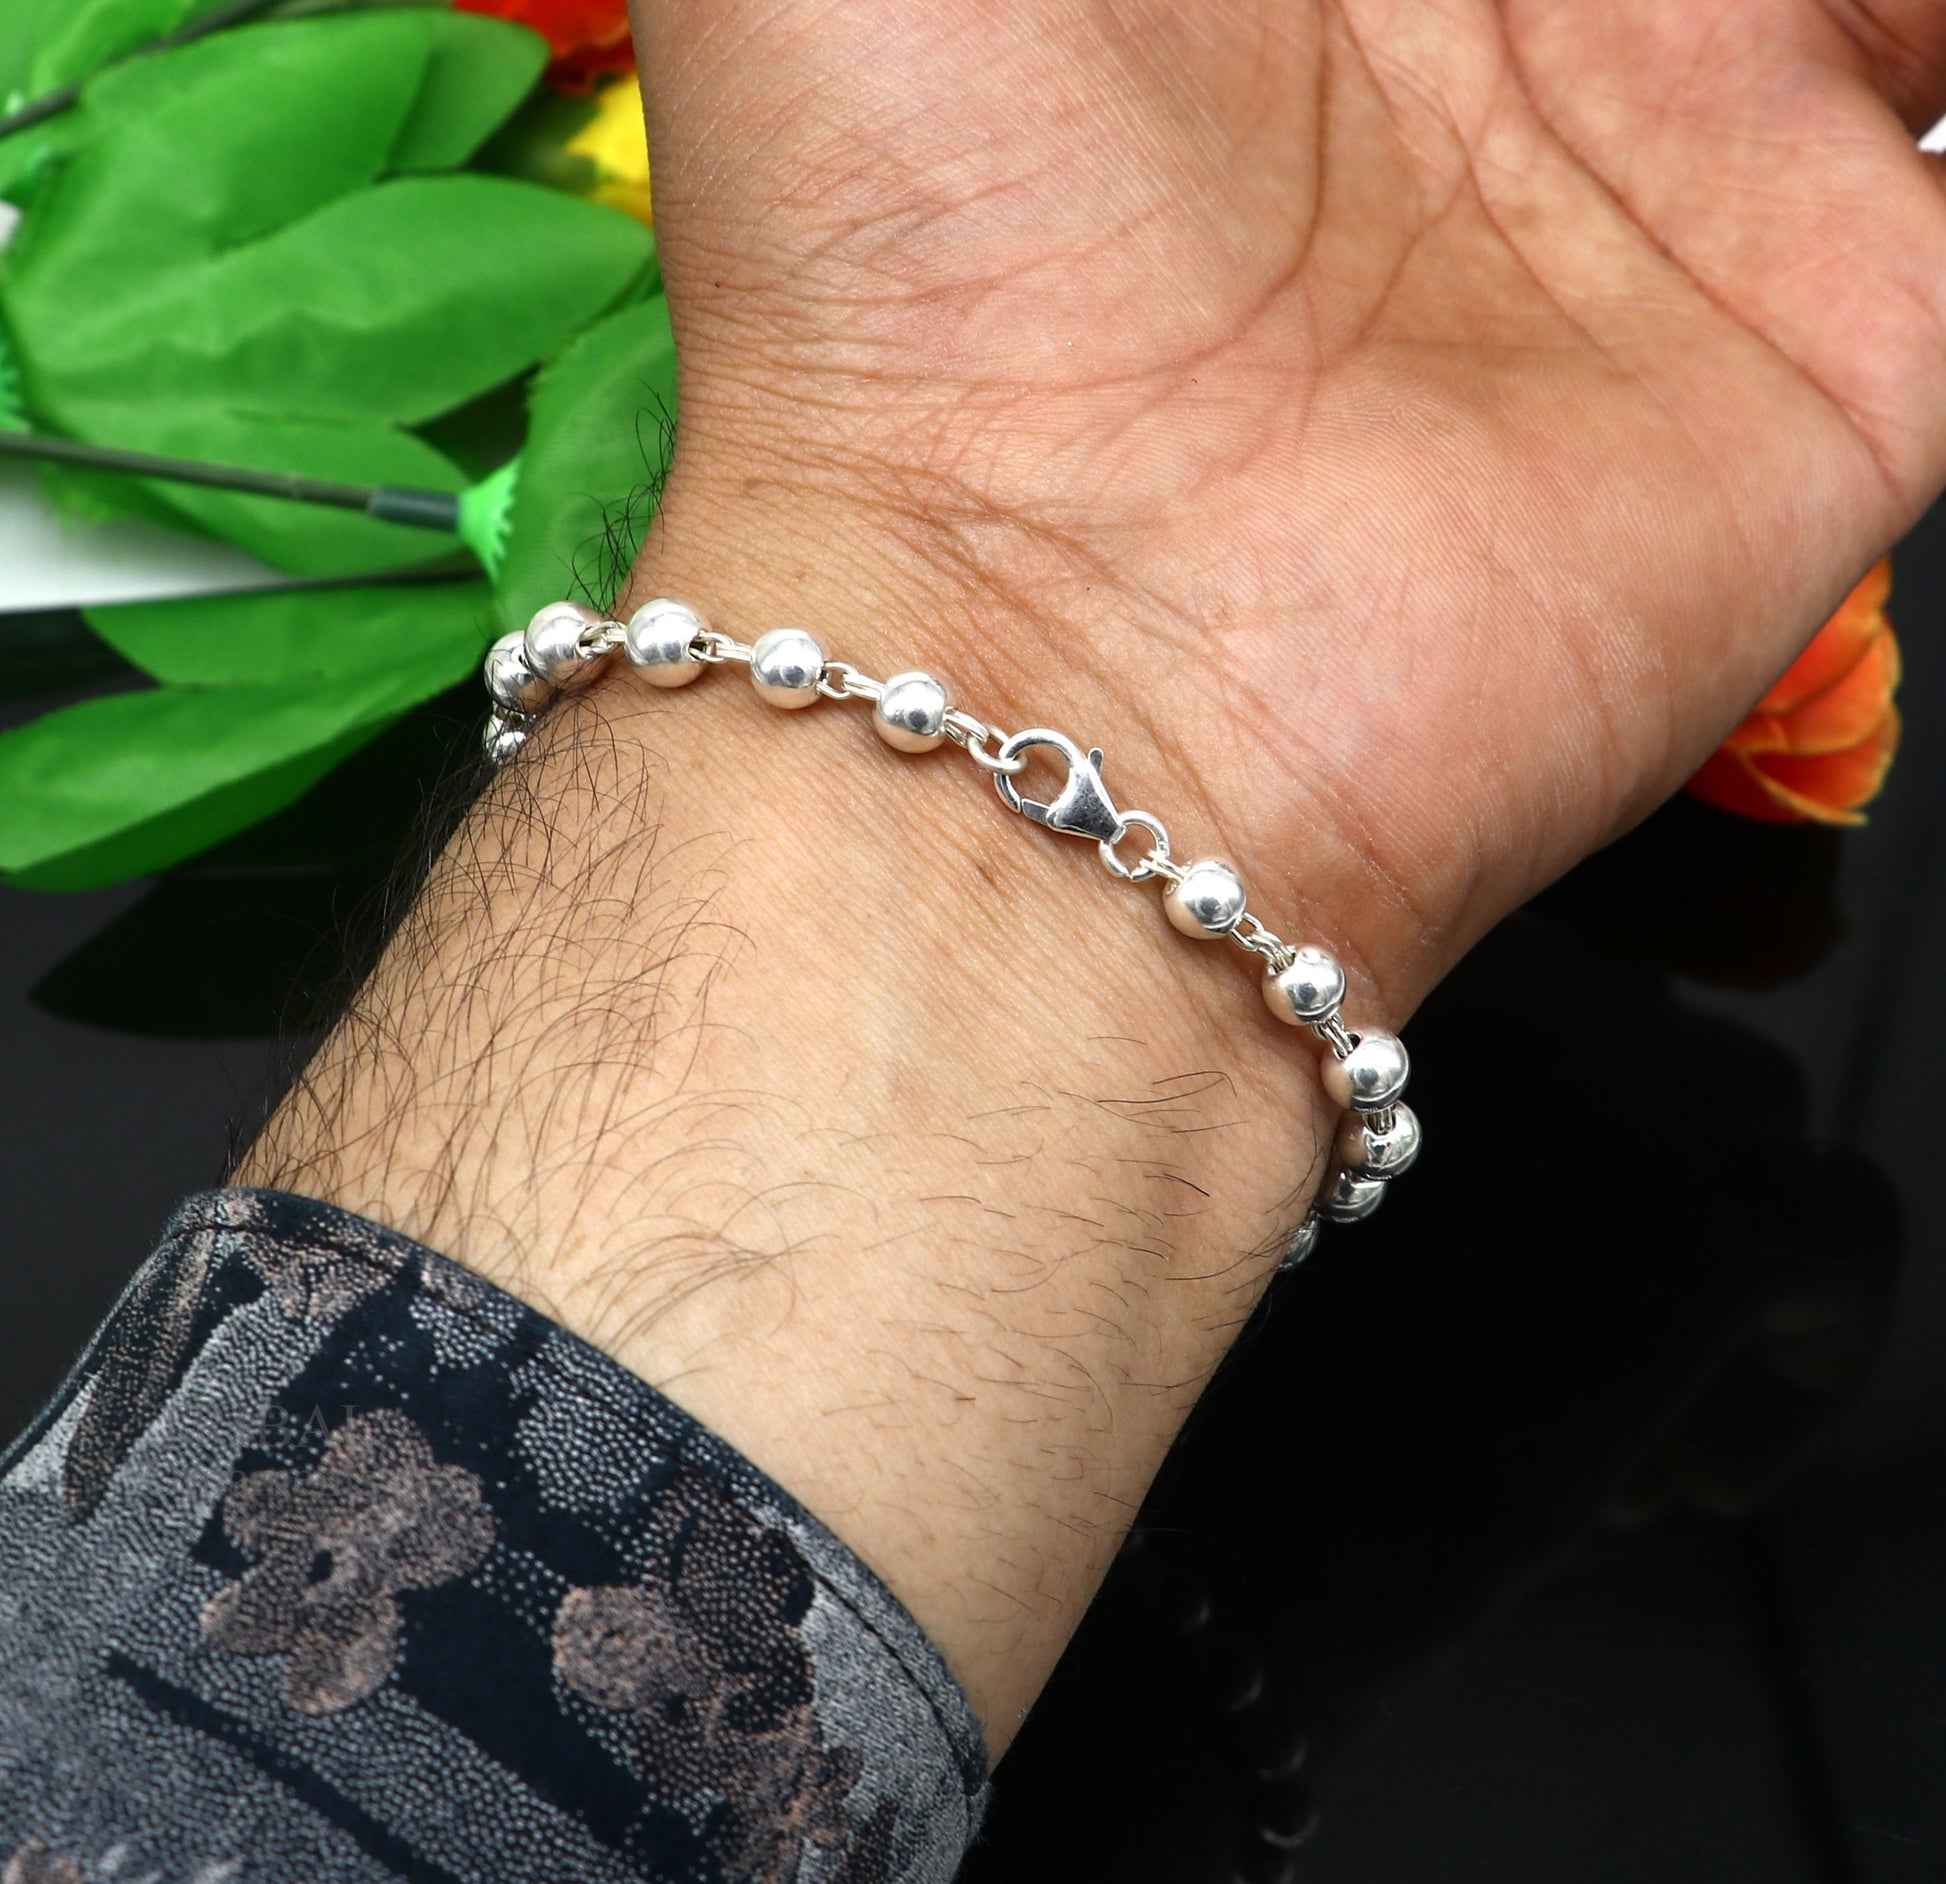 8 inches long 925 sterling silver handmade bracelet, beaded bracelet aqua quartz stone bracelet gorgeous bracelet from india sbr256 - TRIBAL ORNAMENTS